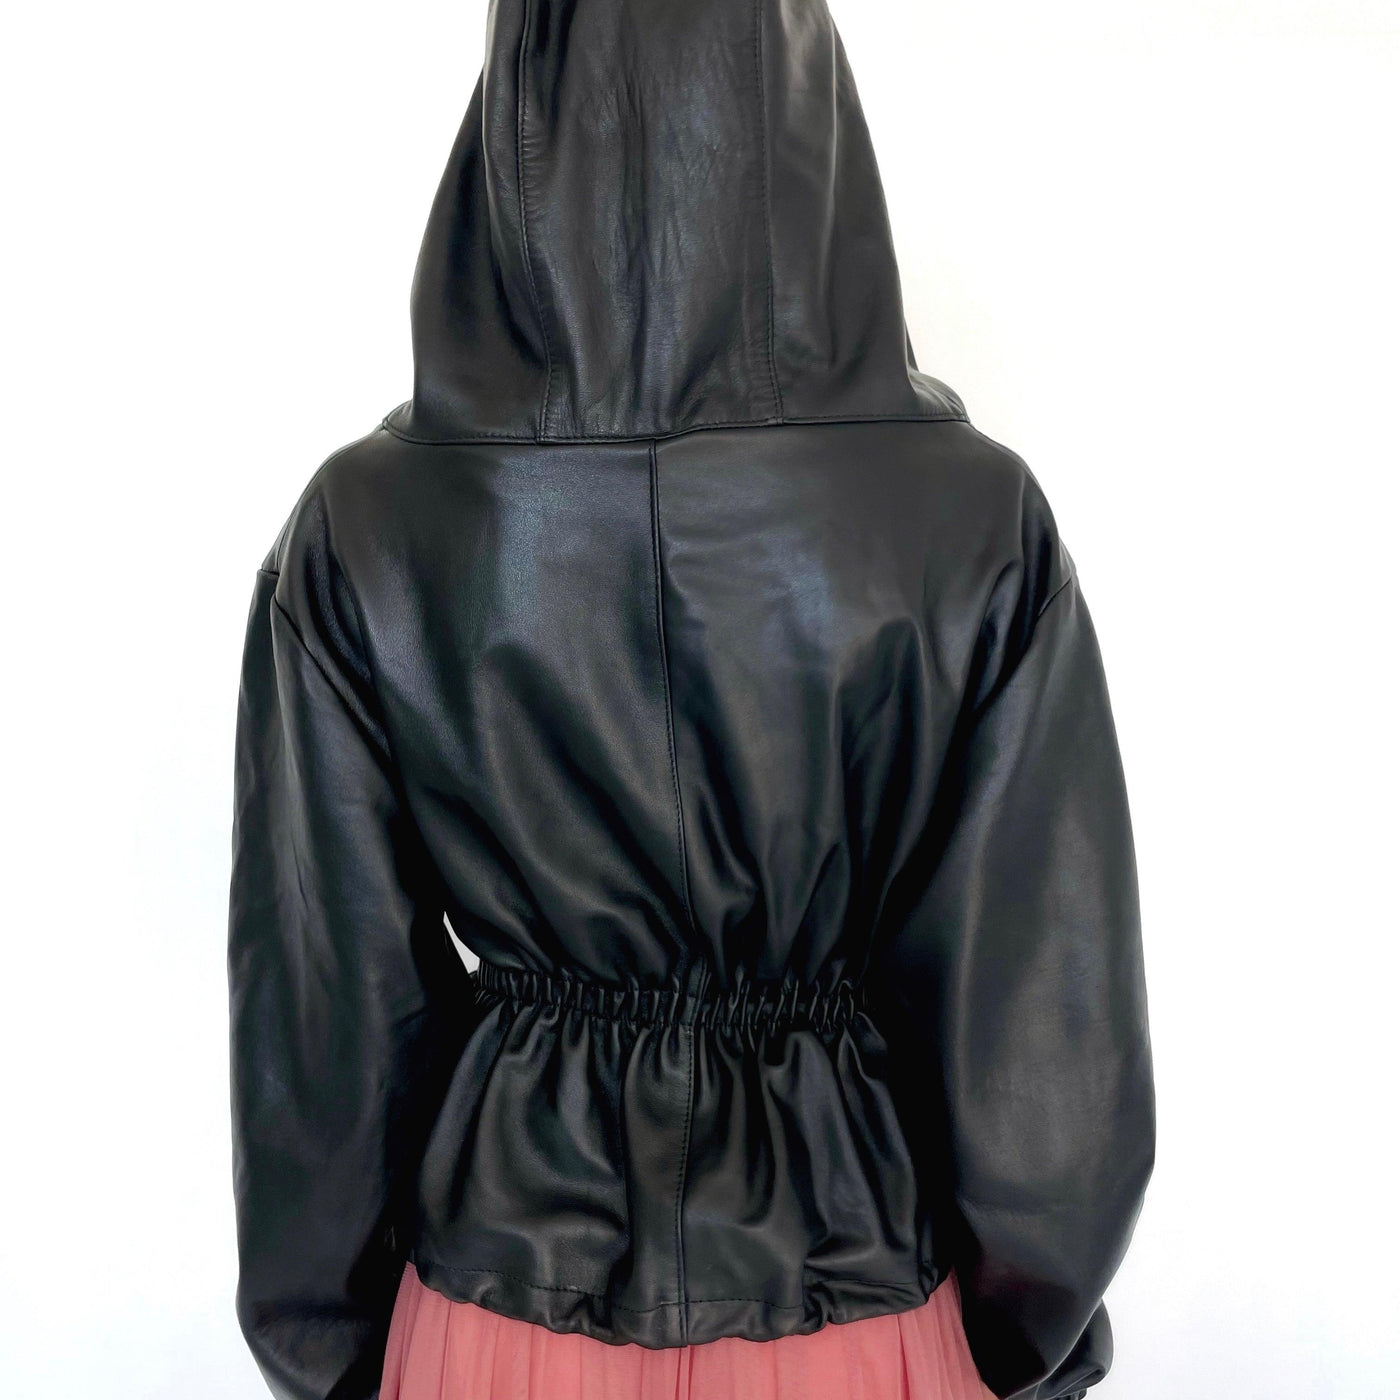 KELLY, the vintage leather jacket with hood - EVA ROJE